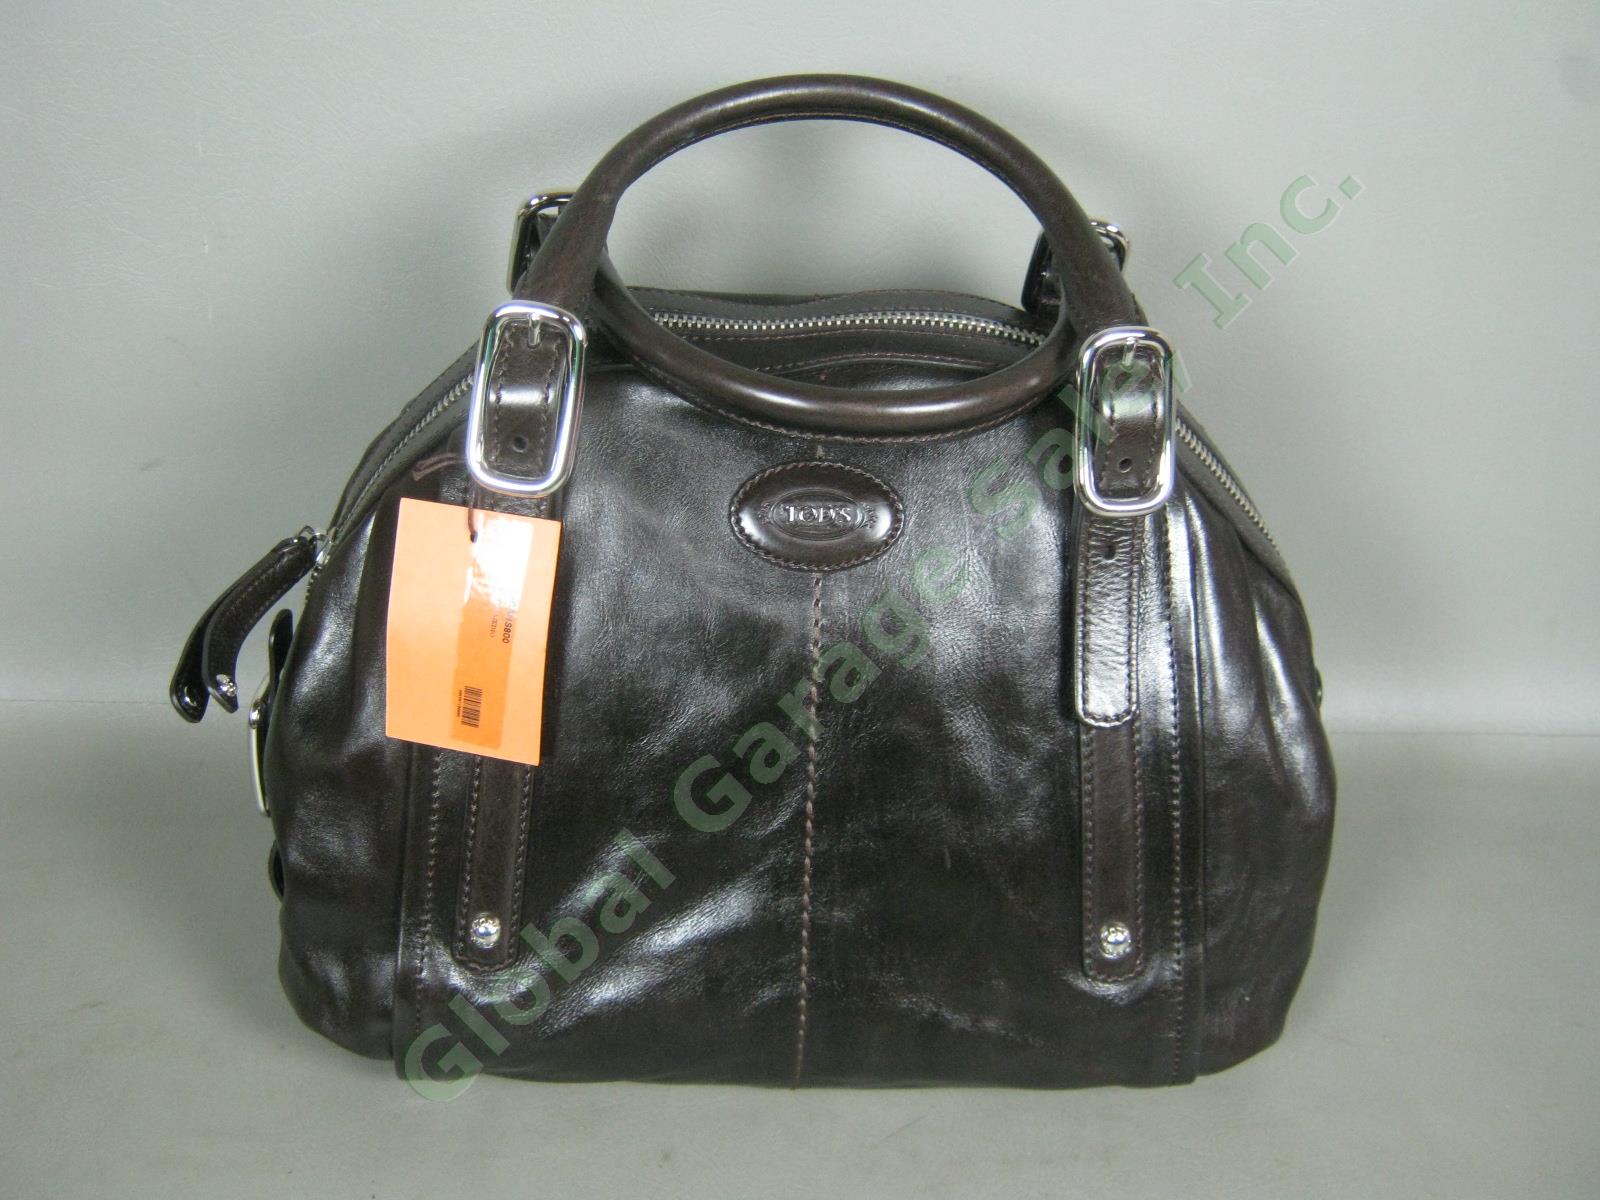 NEW IN BOX Tods Brown Leather G-Bag Bauletto Medium Handbag Pocketbook NO RES! 1